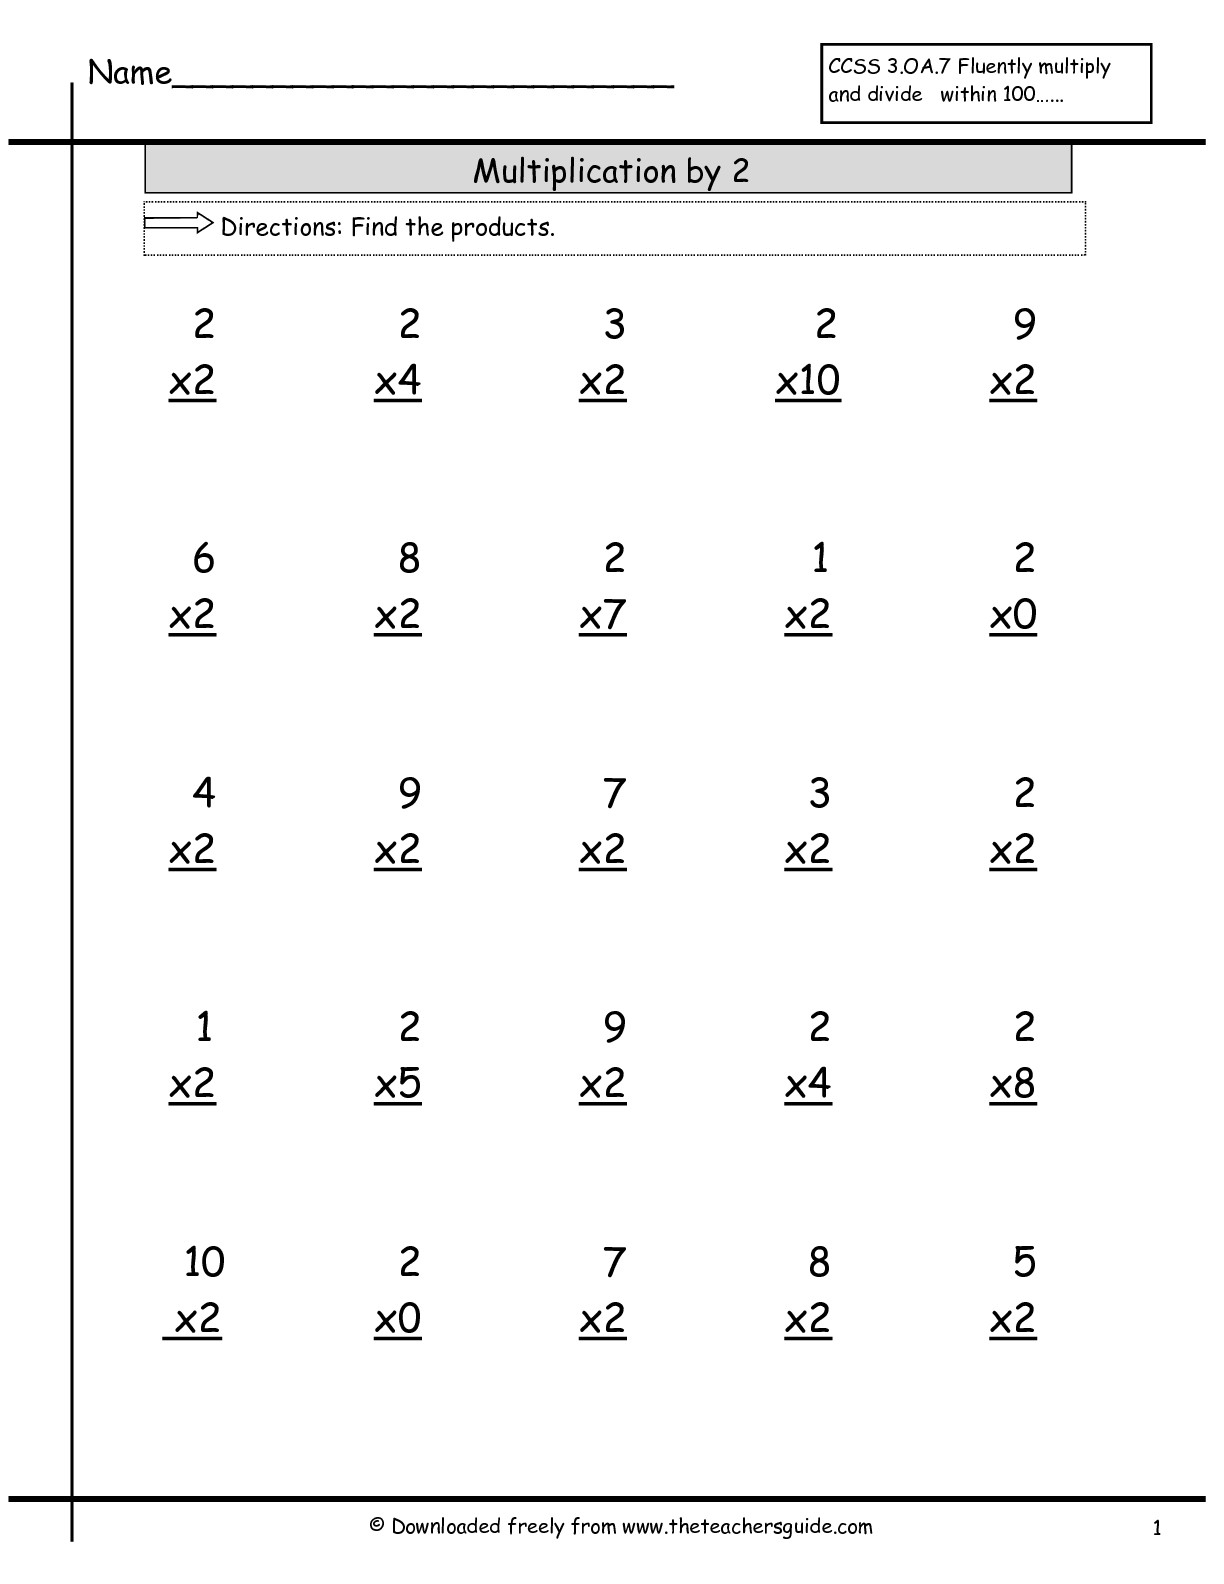 Worksheet Ideas ~ And Multiplication Worksheets Newcts with regard to Multiplication Worksheets X2 X3